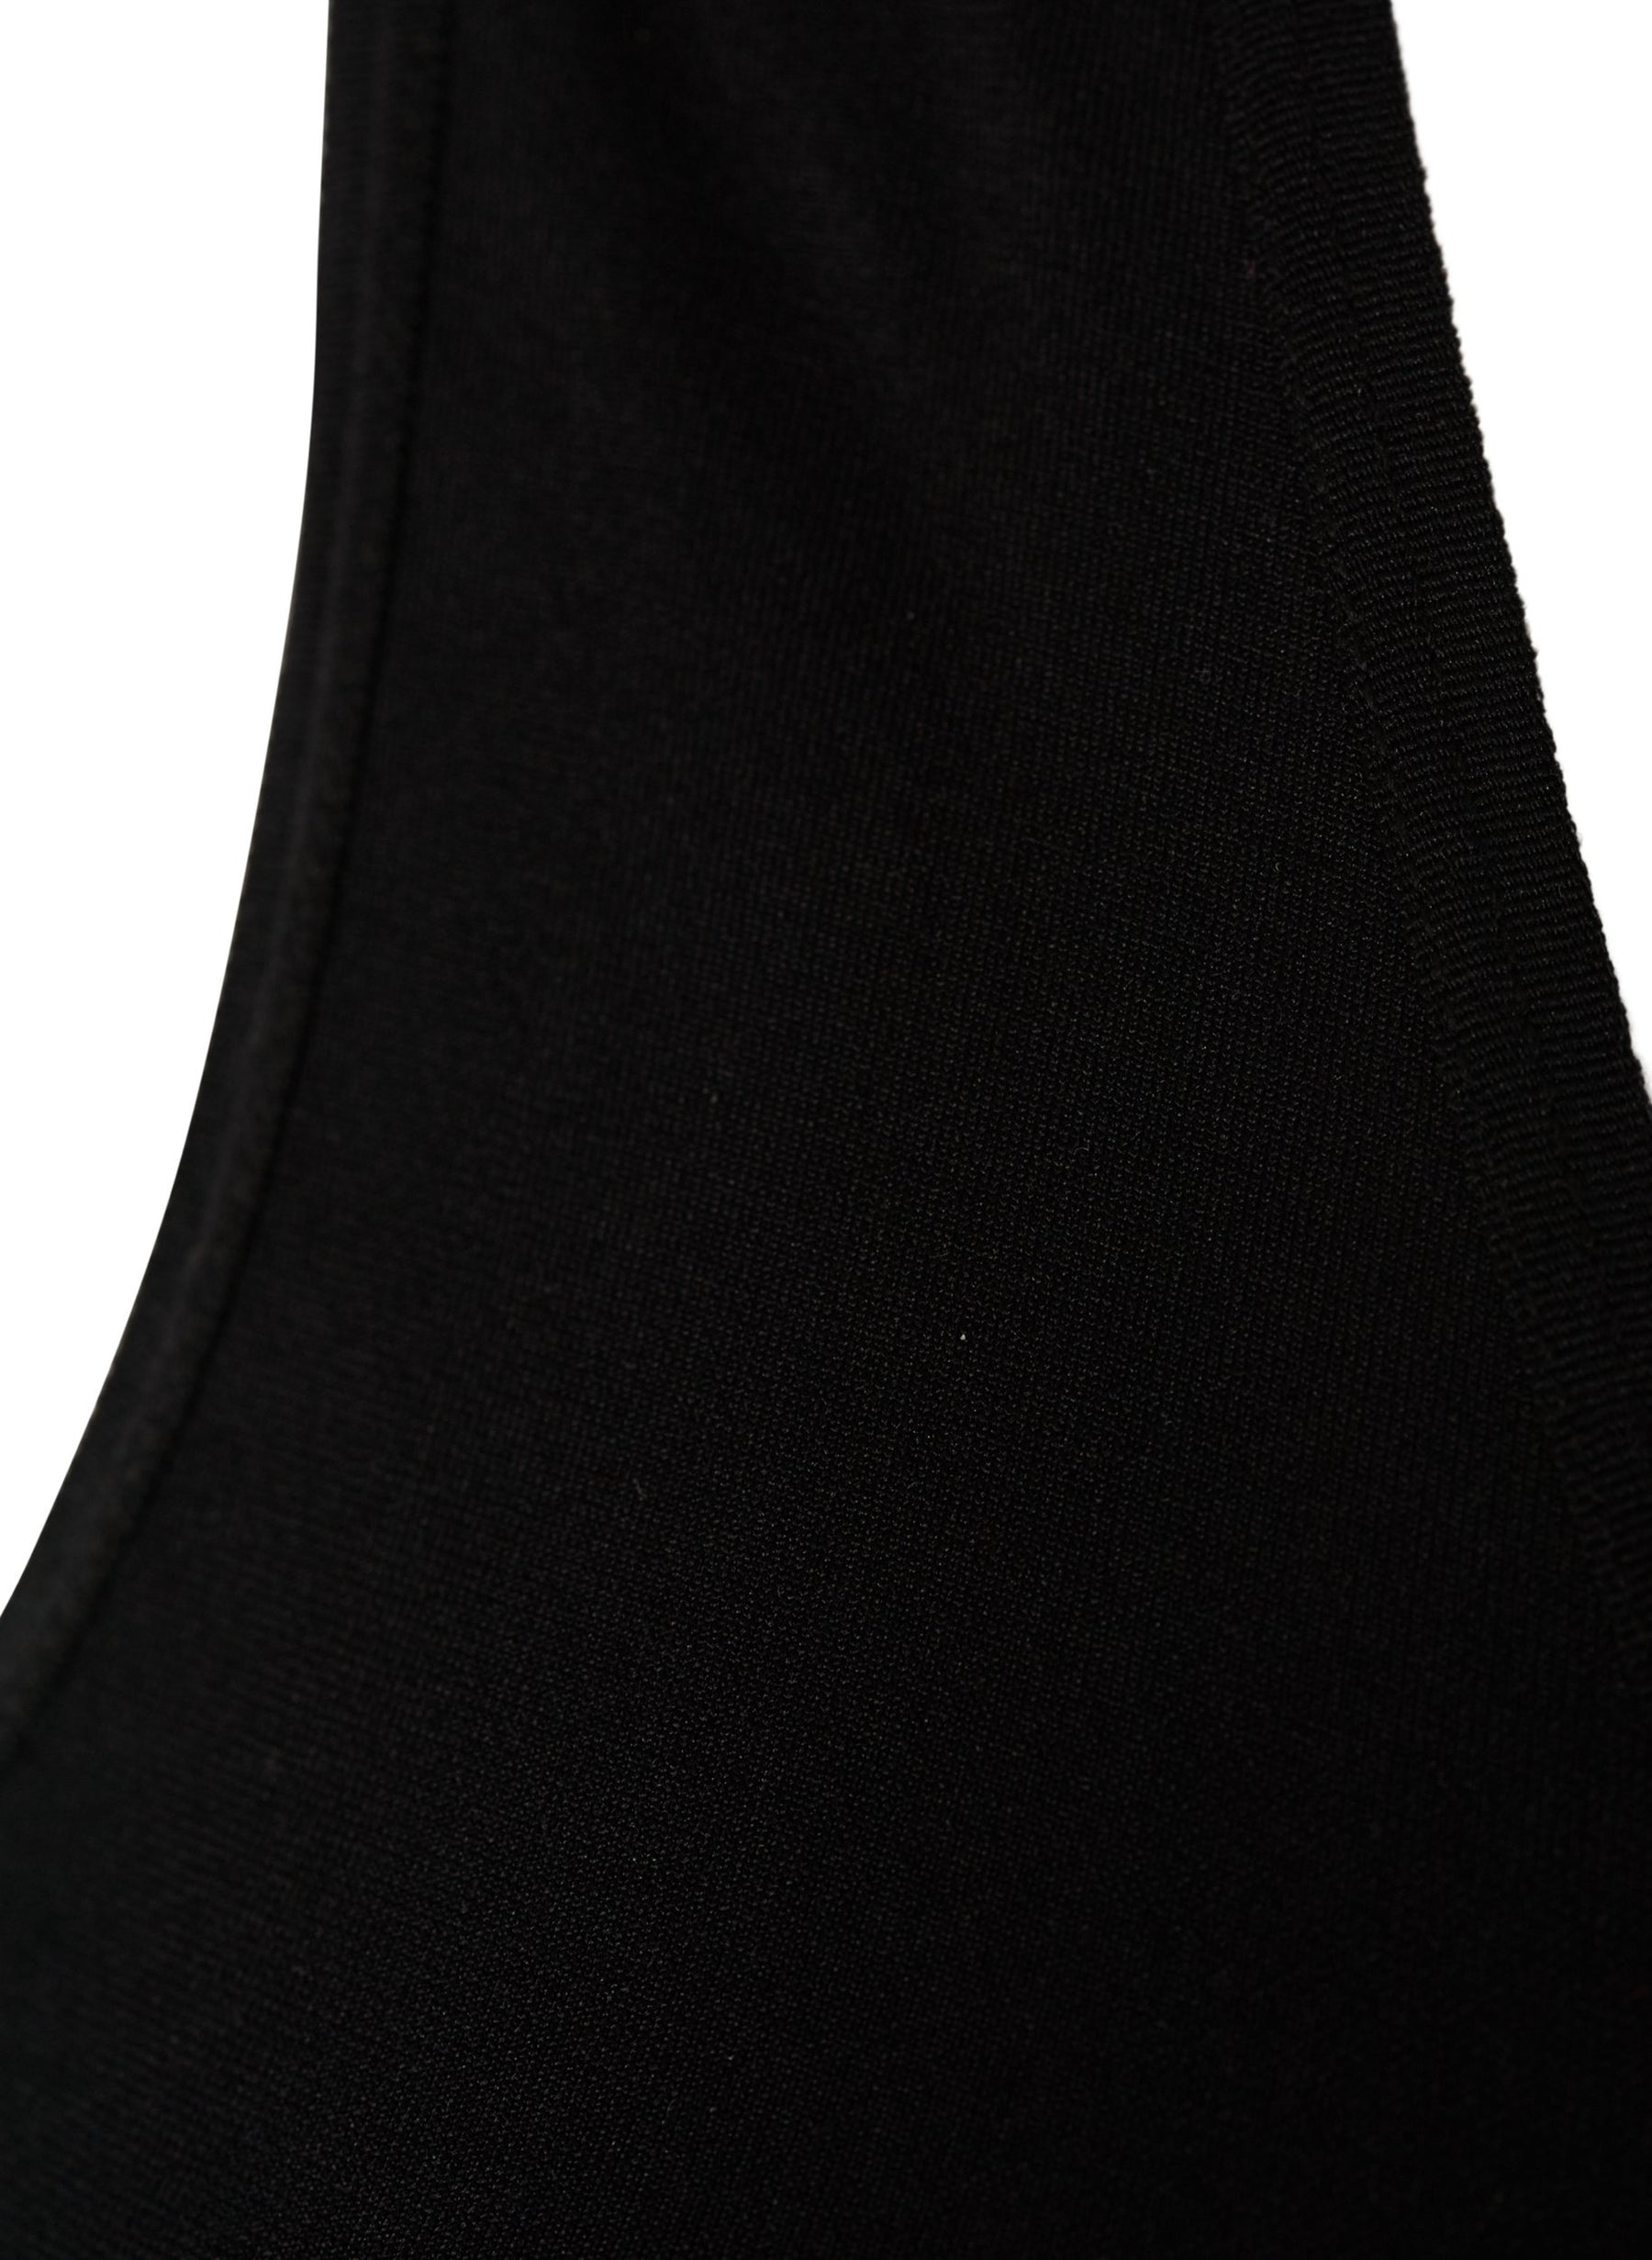 Zizzi Shapewear Vest in Black, Plus Size Clothing